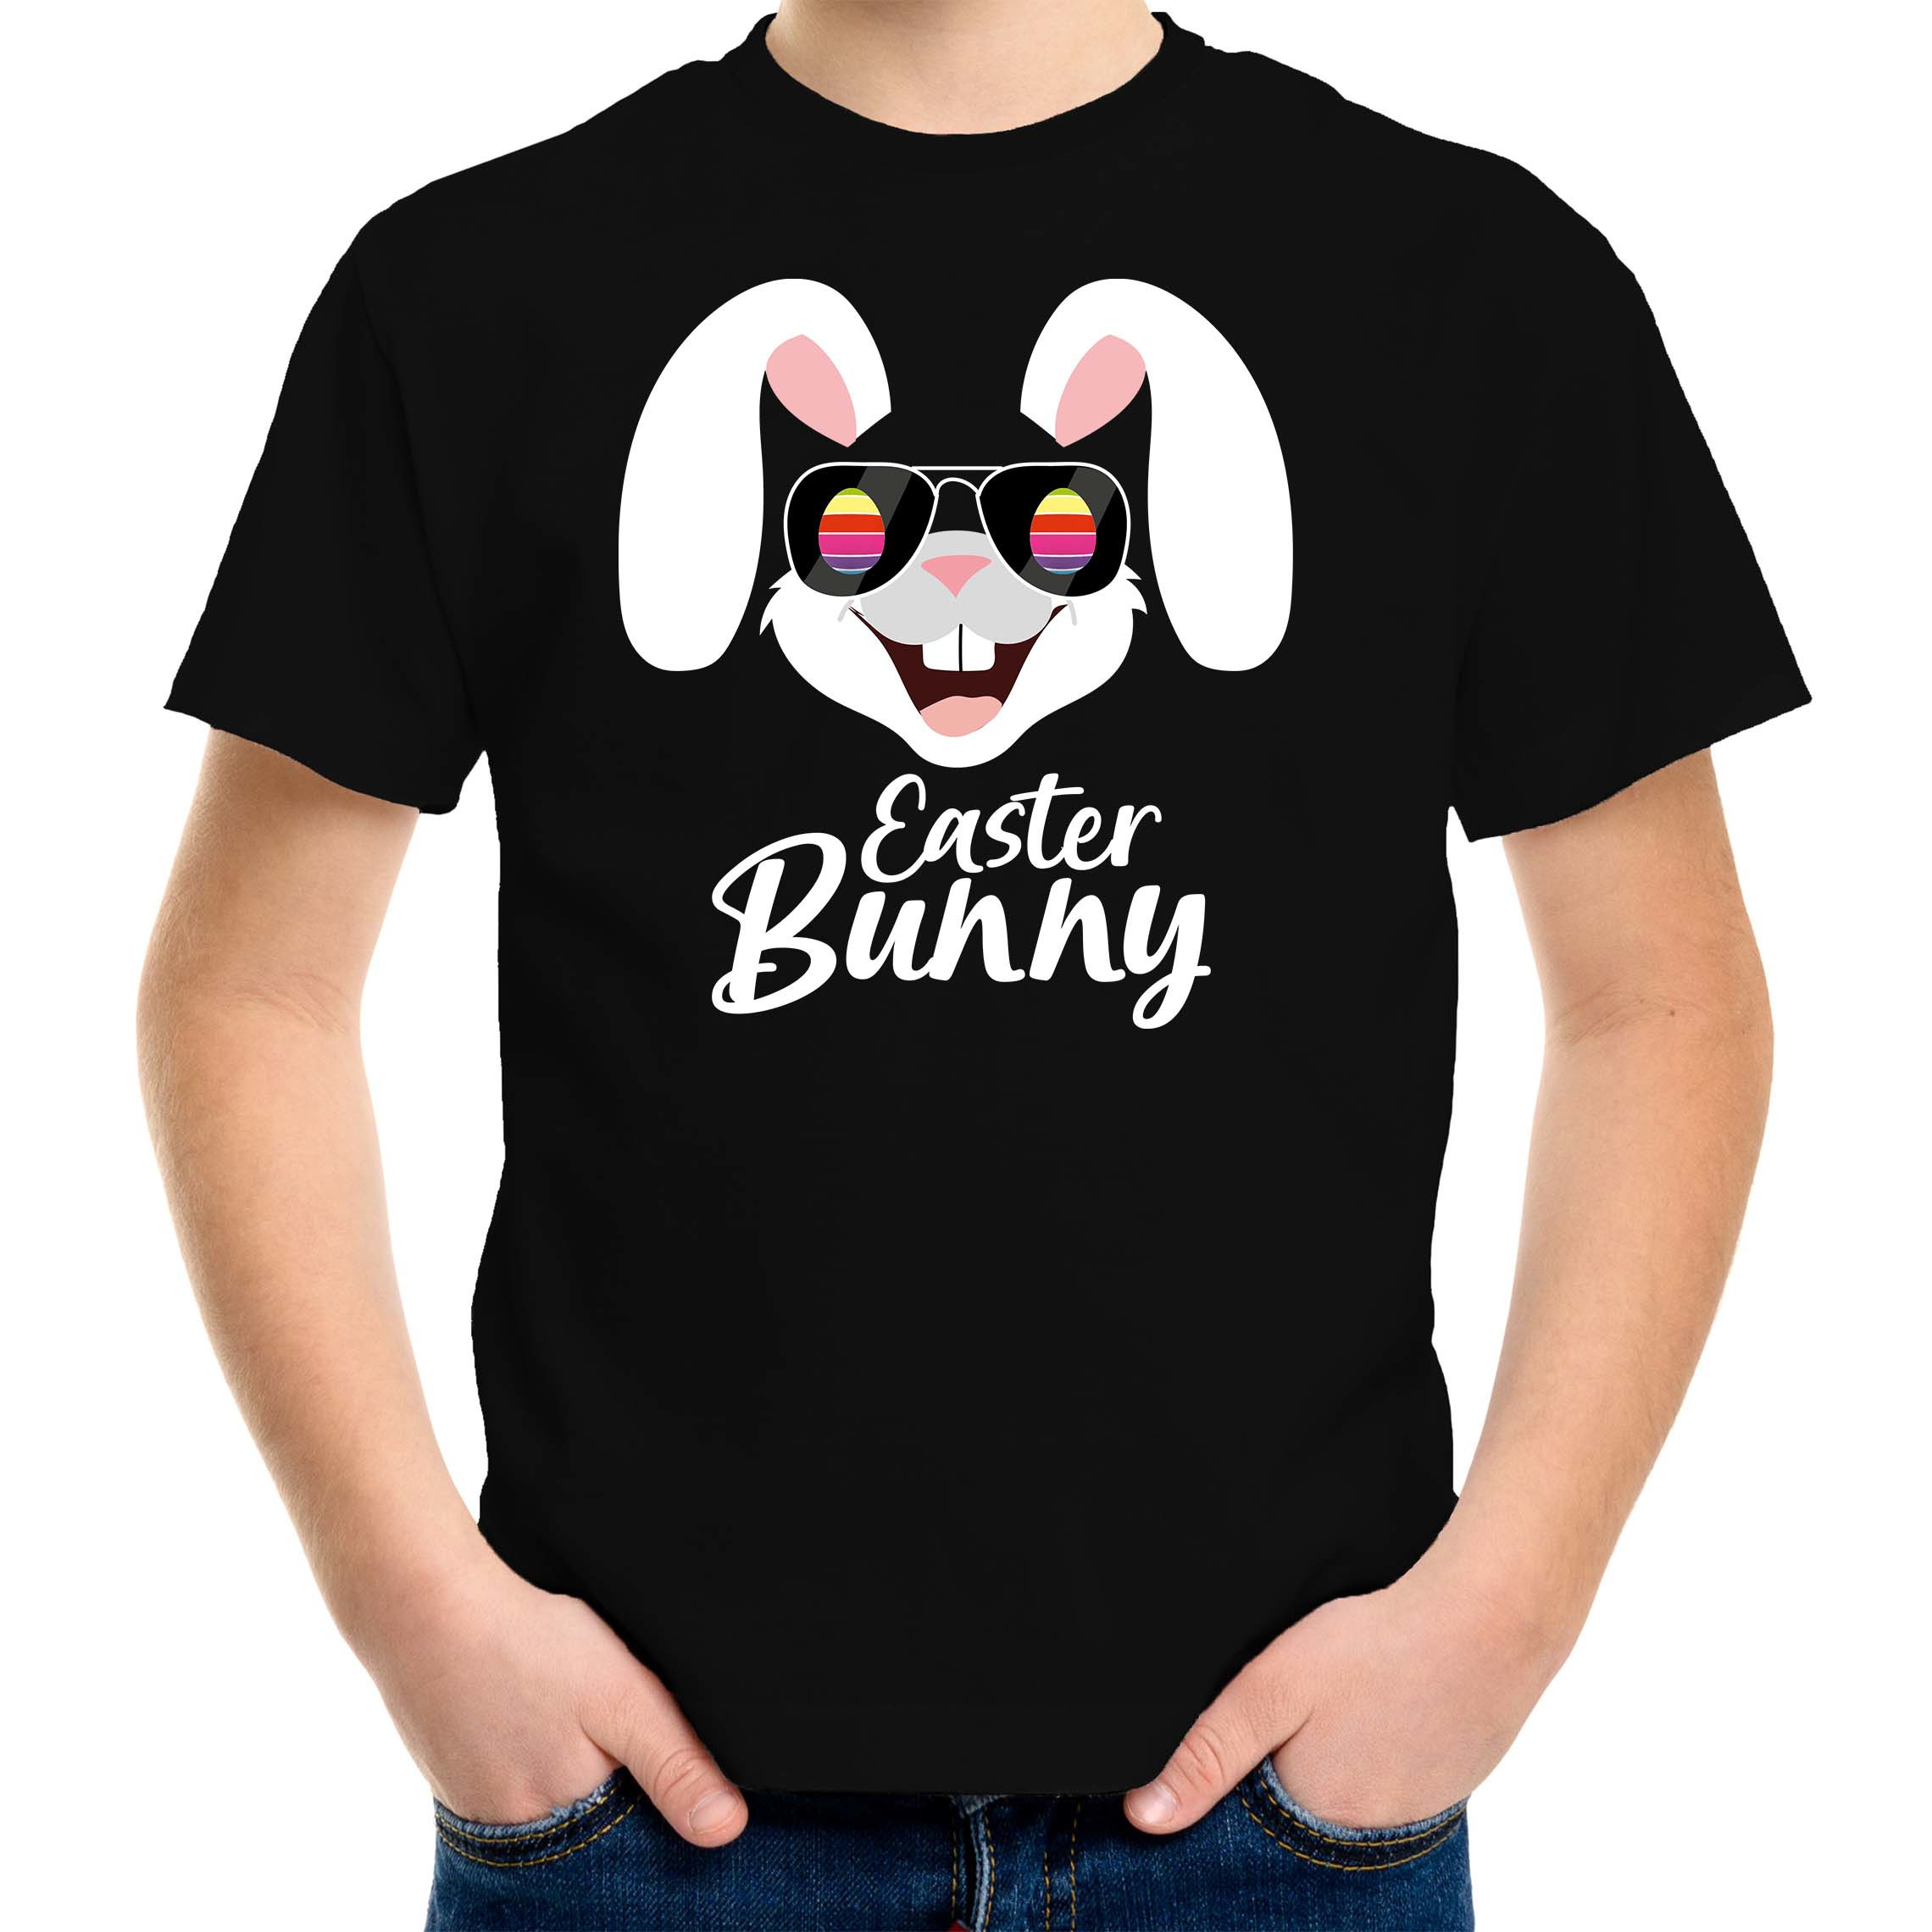 Easter bunny-Paashaas t-shirt zwart voor kinderen Foute kleding-outfit Pasen